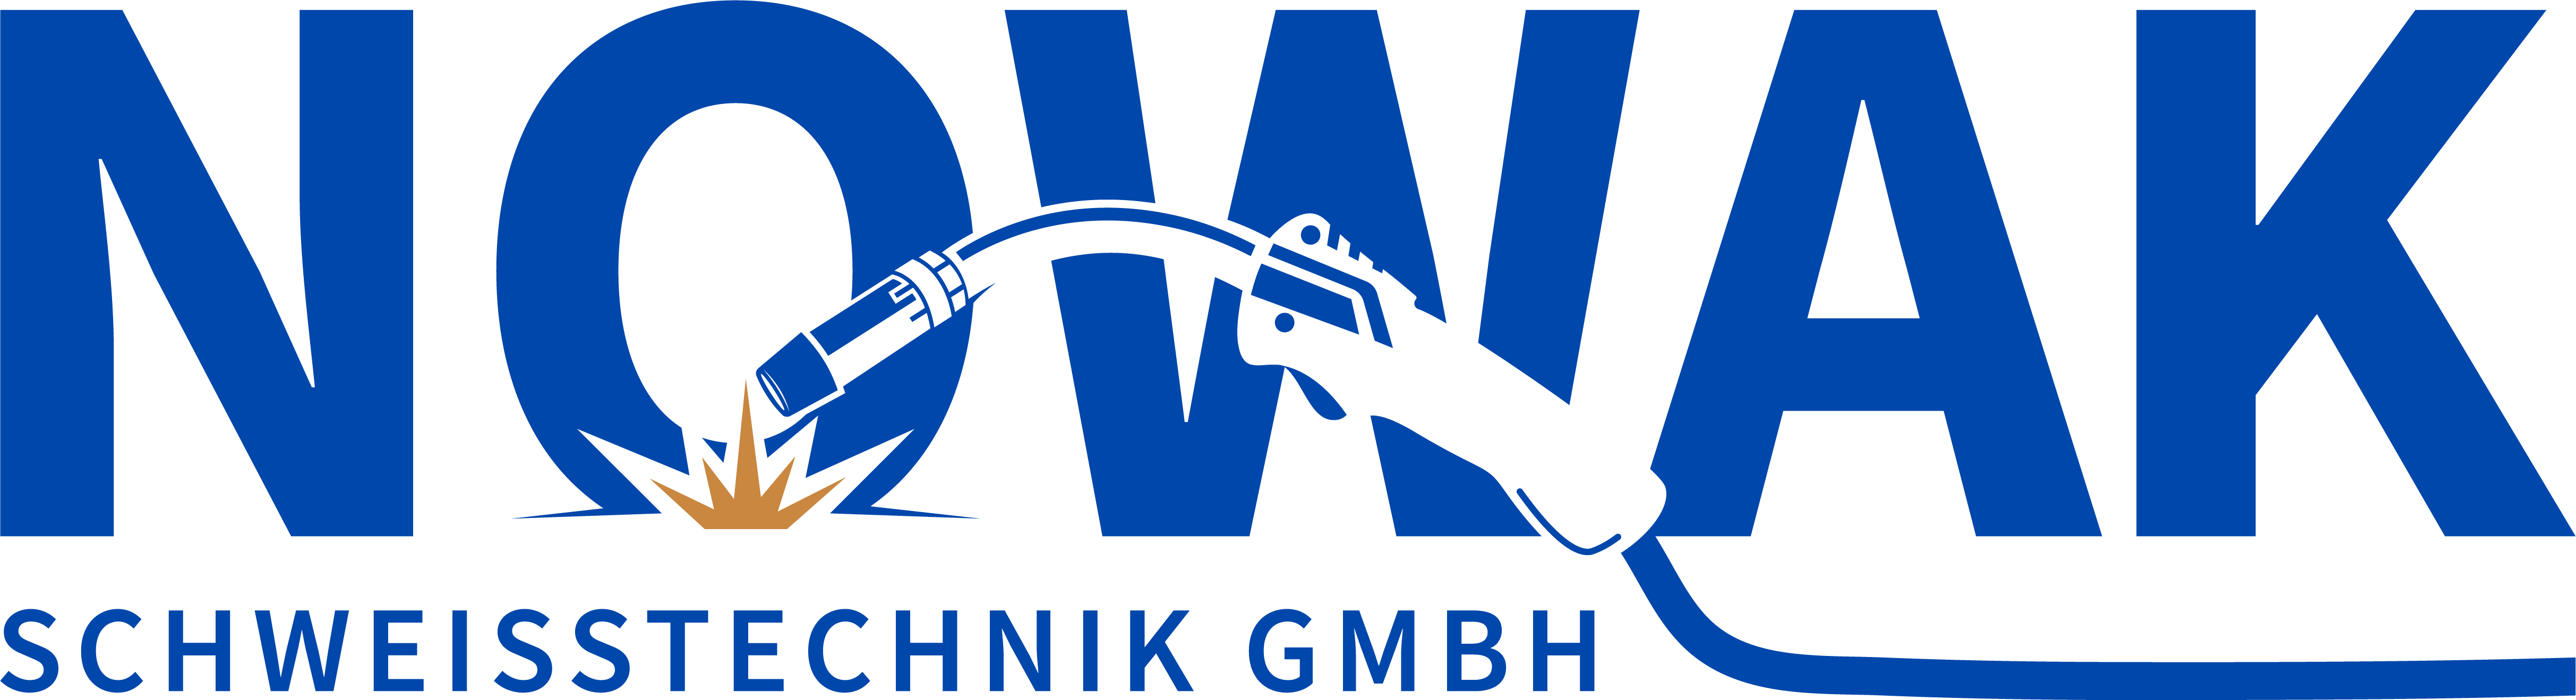 nowak schweisstechnik logo hp